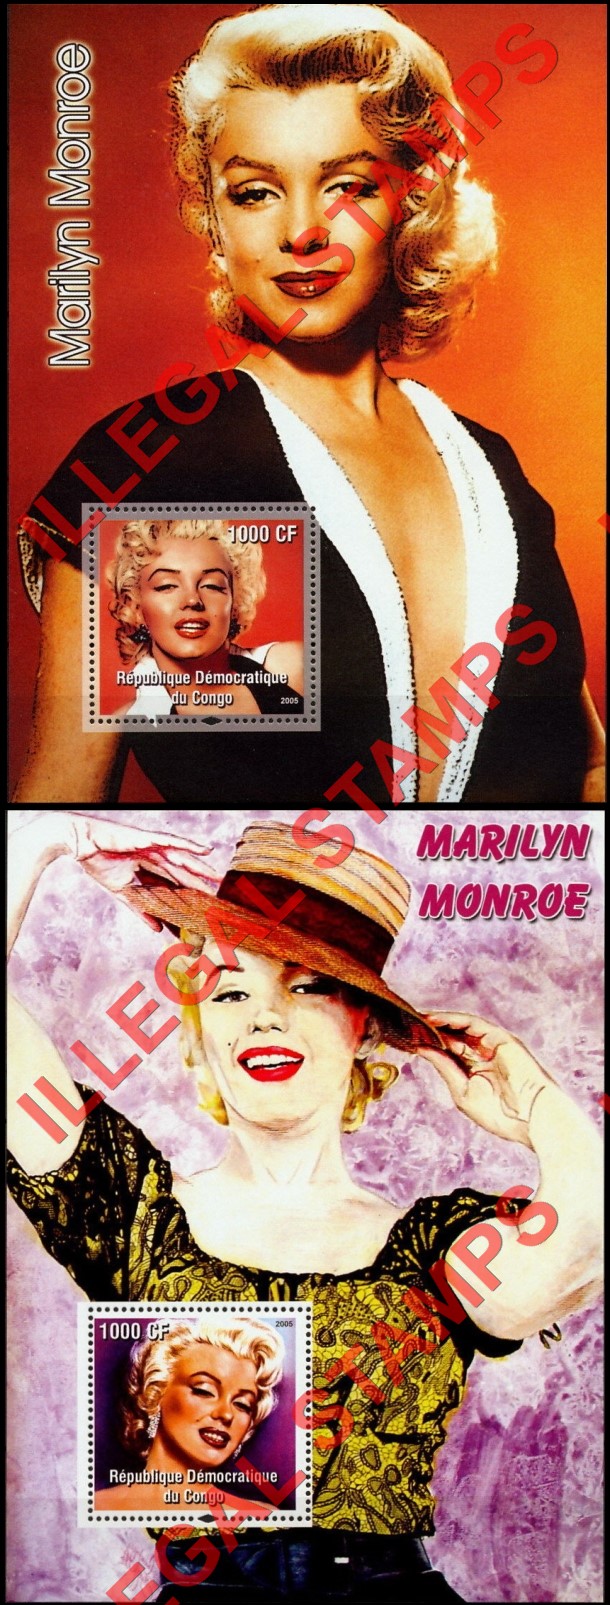 Congo Democratic Republic 2005 Marilyn Monroe Illegal Stamp Souvenir Sheets of 1 (Part 1)